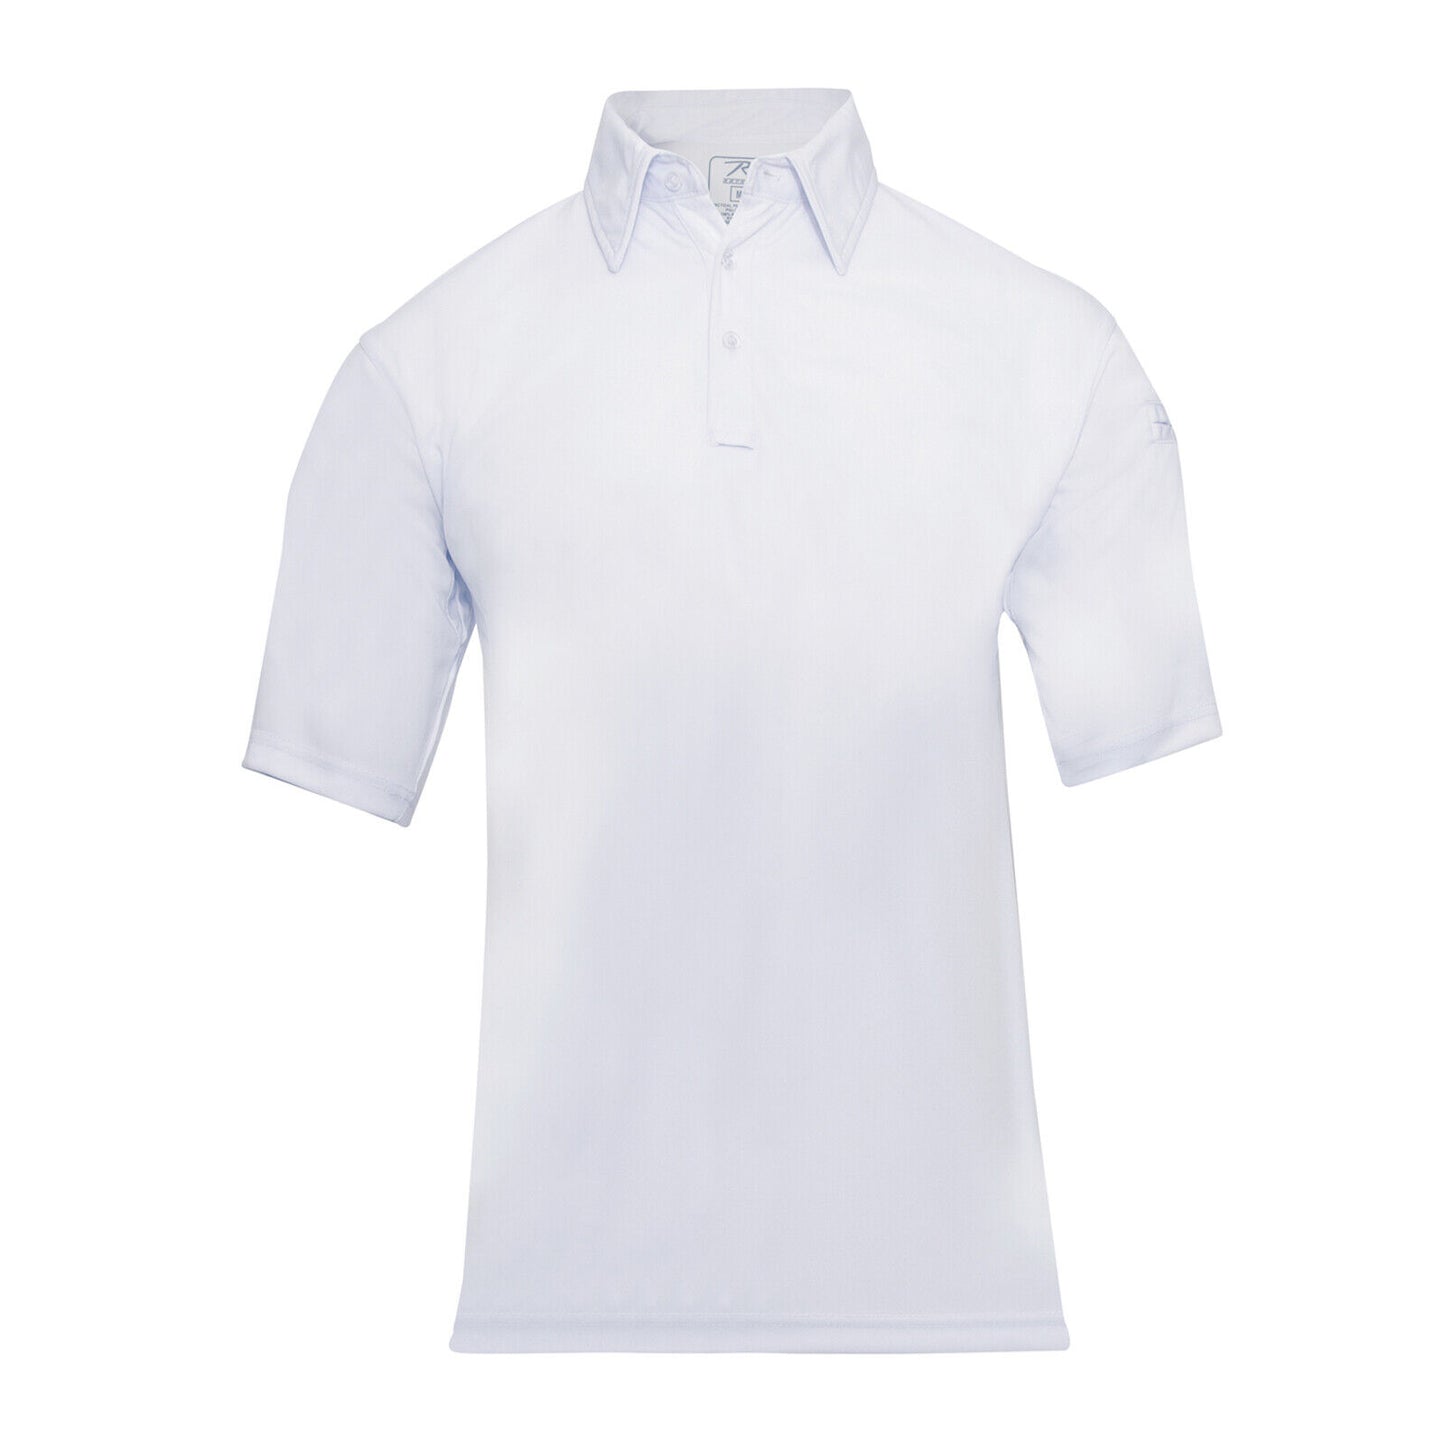 Men's Short Sleeve Tactical Performance White Polo Shirt